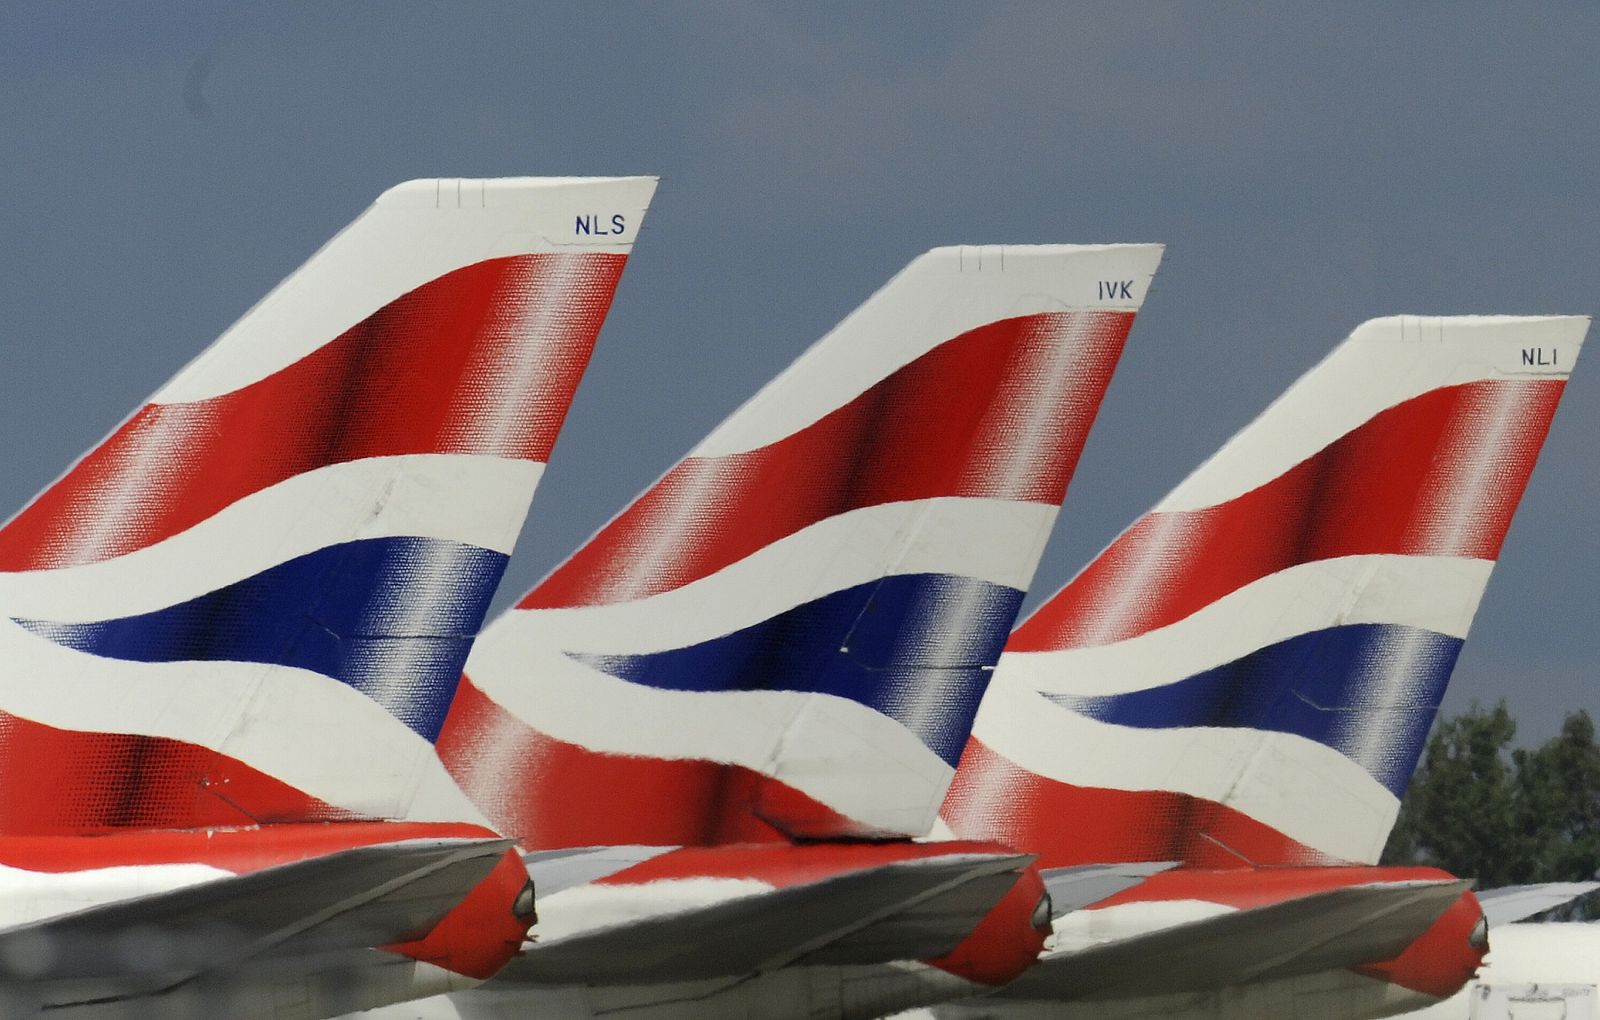 British Airways aircraft tailfins are seen at Heathrow Airport in west London